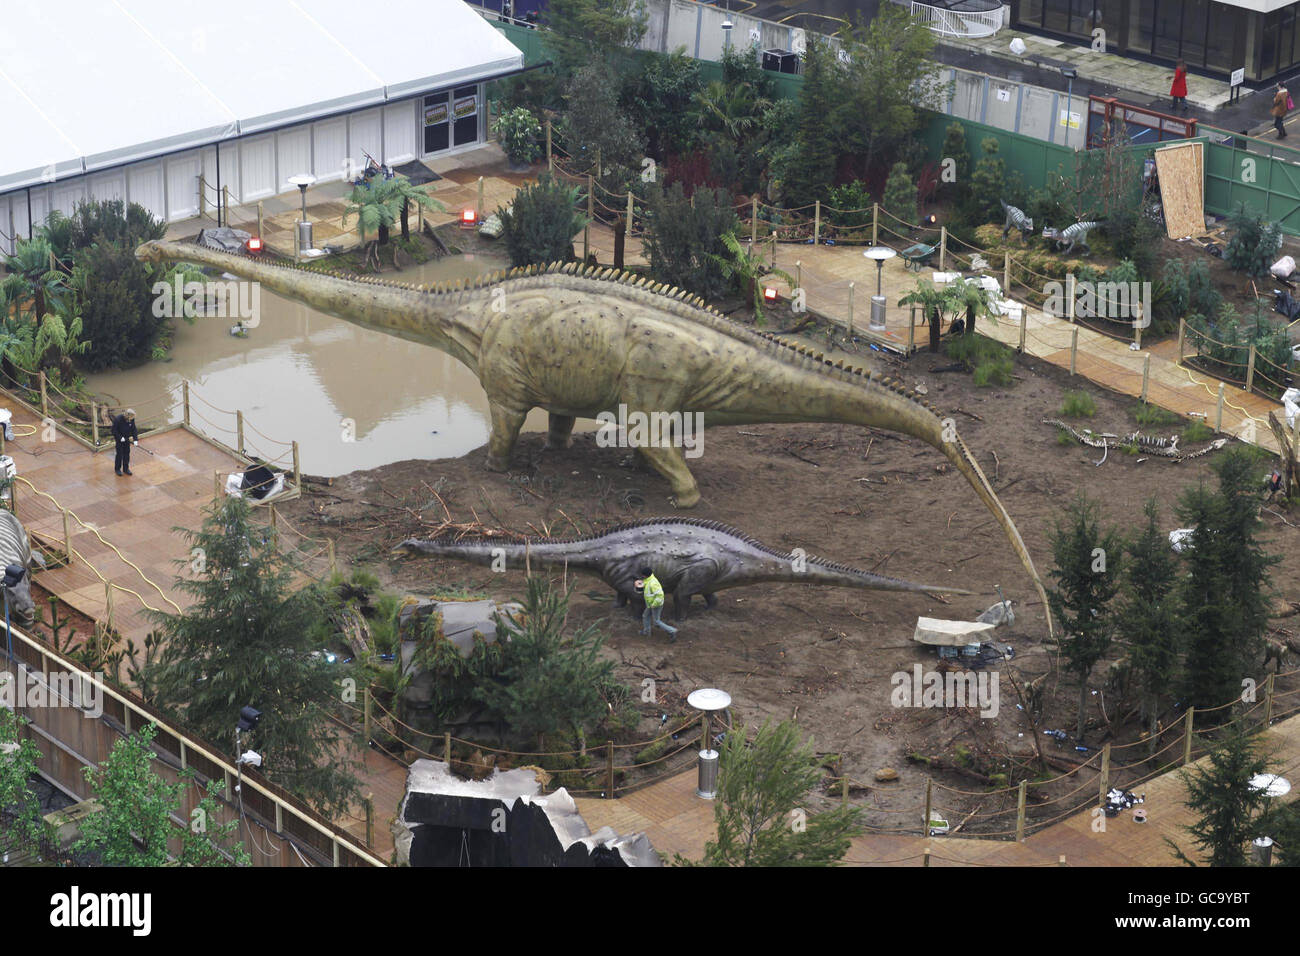 Dinosaurio de tamaño completo fotografías e imágenes de alta resolución -  Alamy